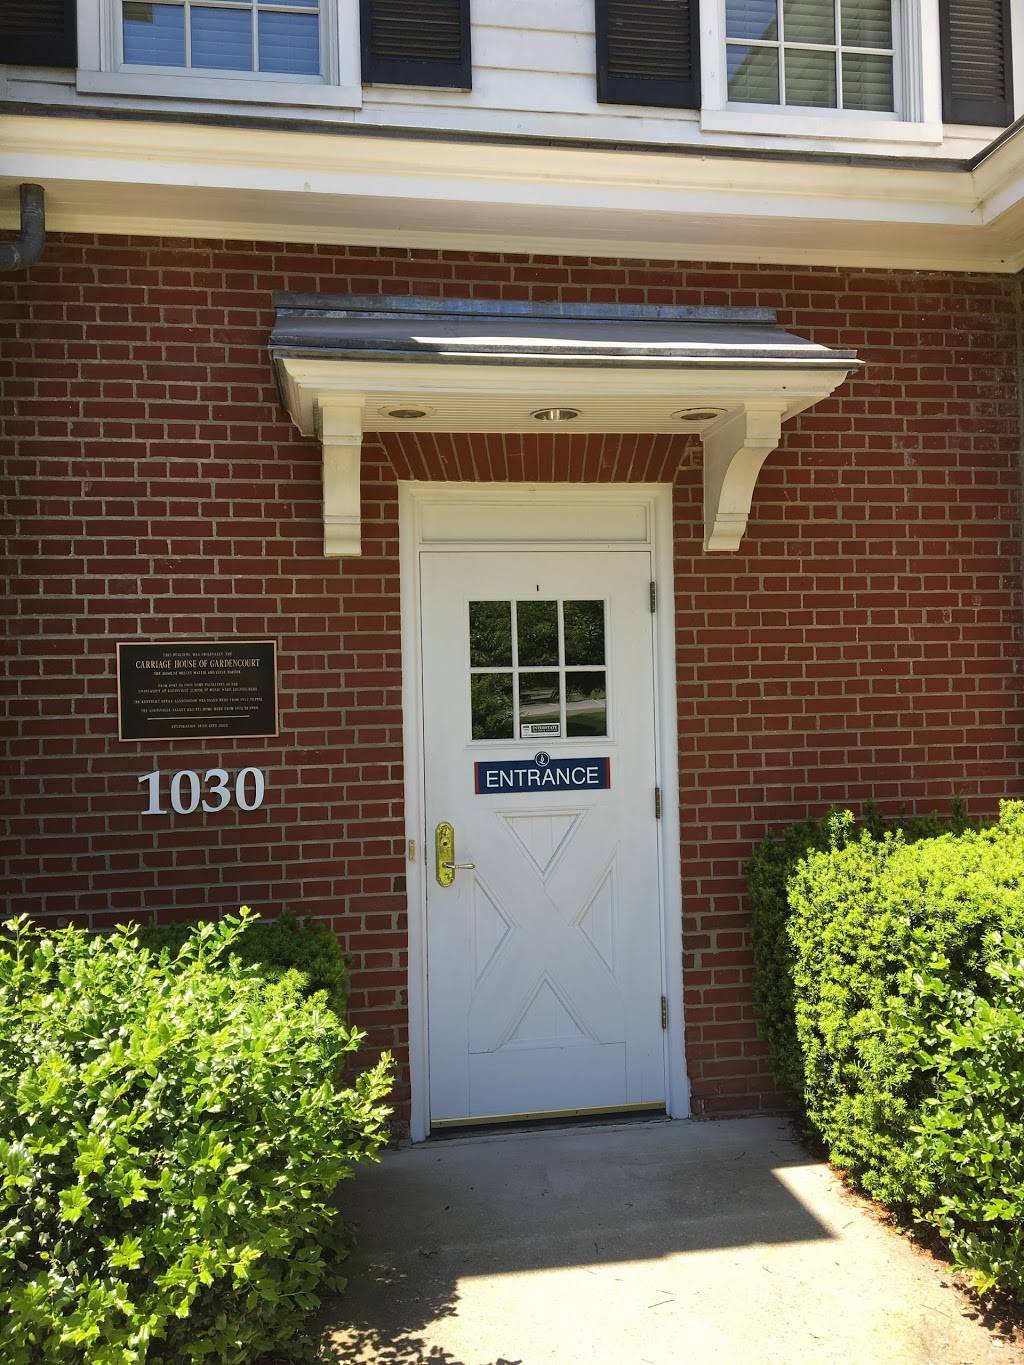 Presbyterian Homes & Services of Kentucky (Home Office) | 1030 Alta Vista Rd #1758, Louisville, KY 40205, USA | Phone: (502) 259-9101